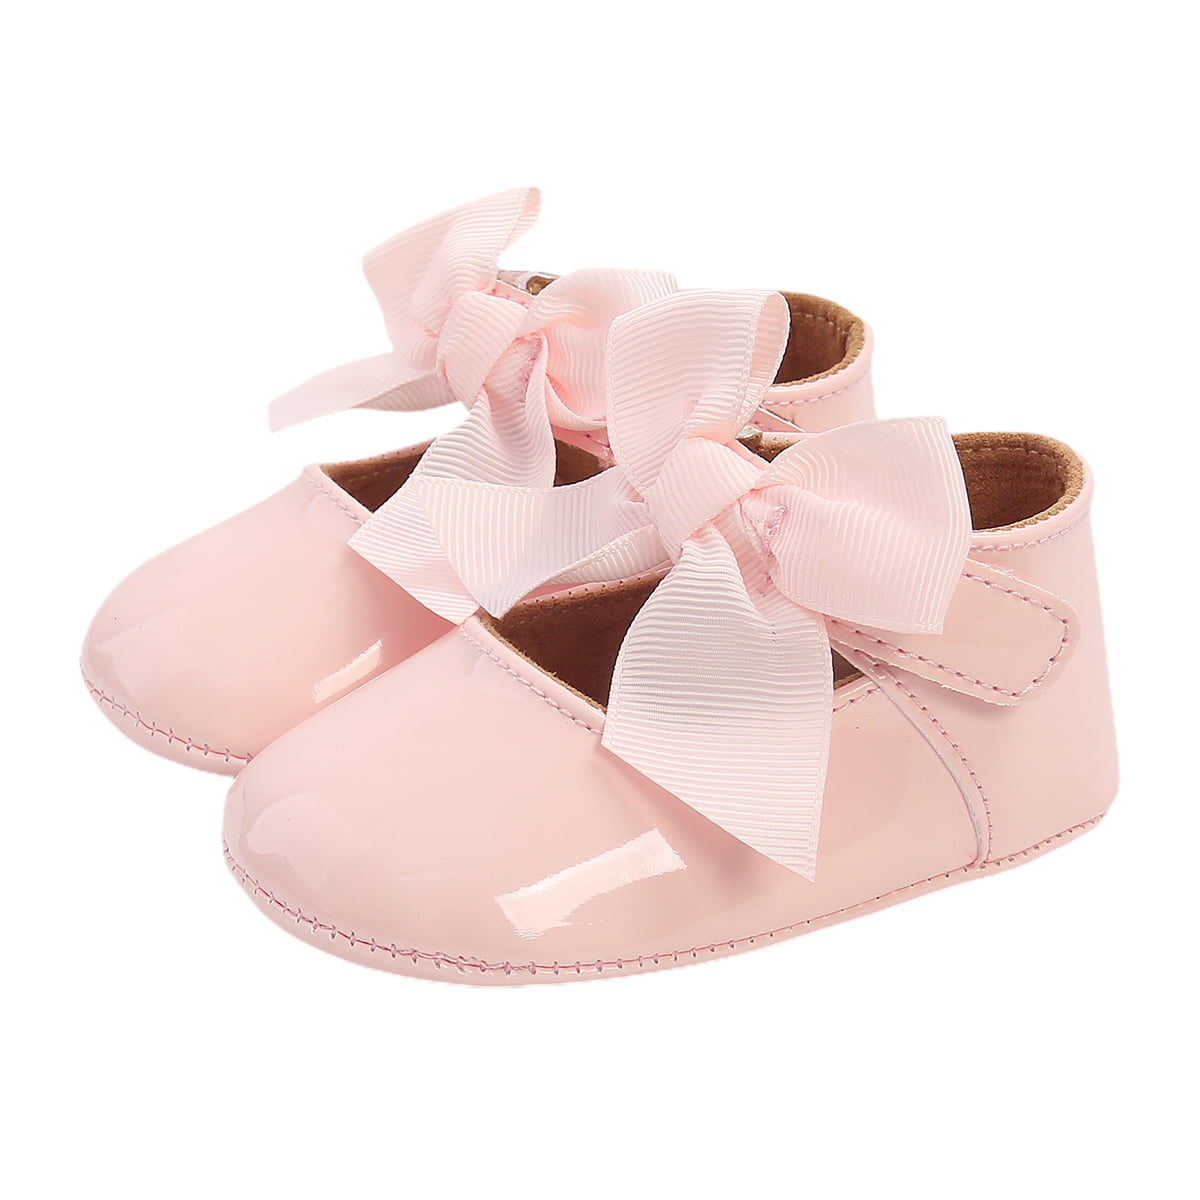 Avish Baby Girls Bowknot Crib Shoes Non-Slip Soft Sole Mary Jane Flats Infant Toddler Prewalker Dress Shoes